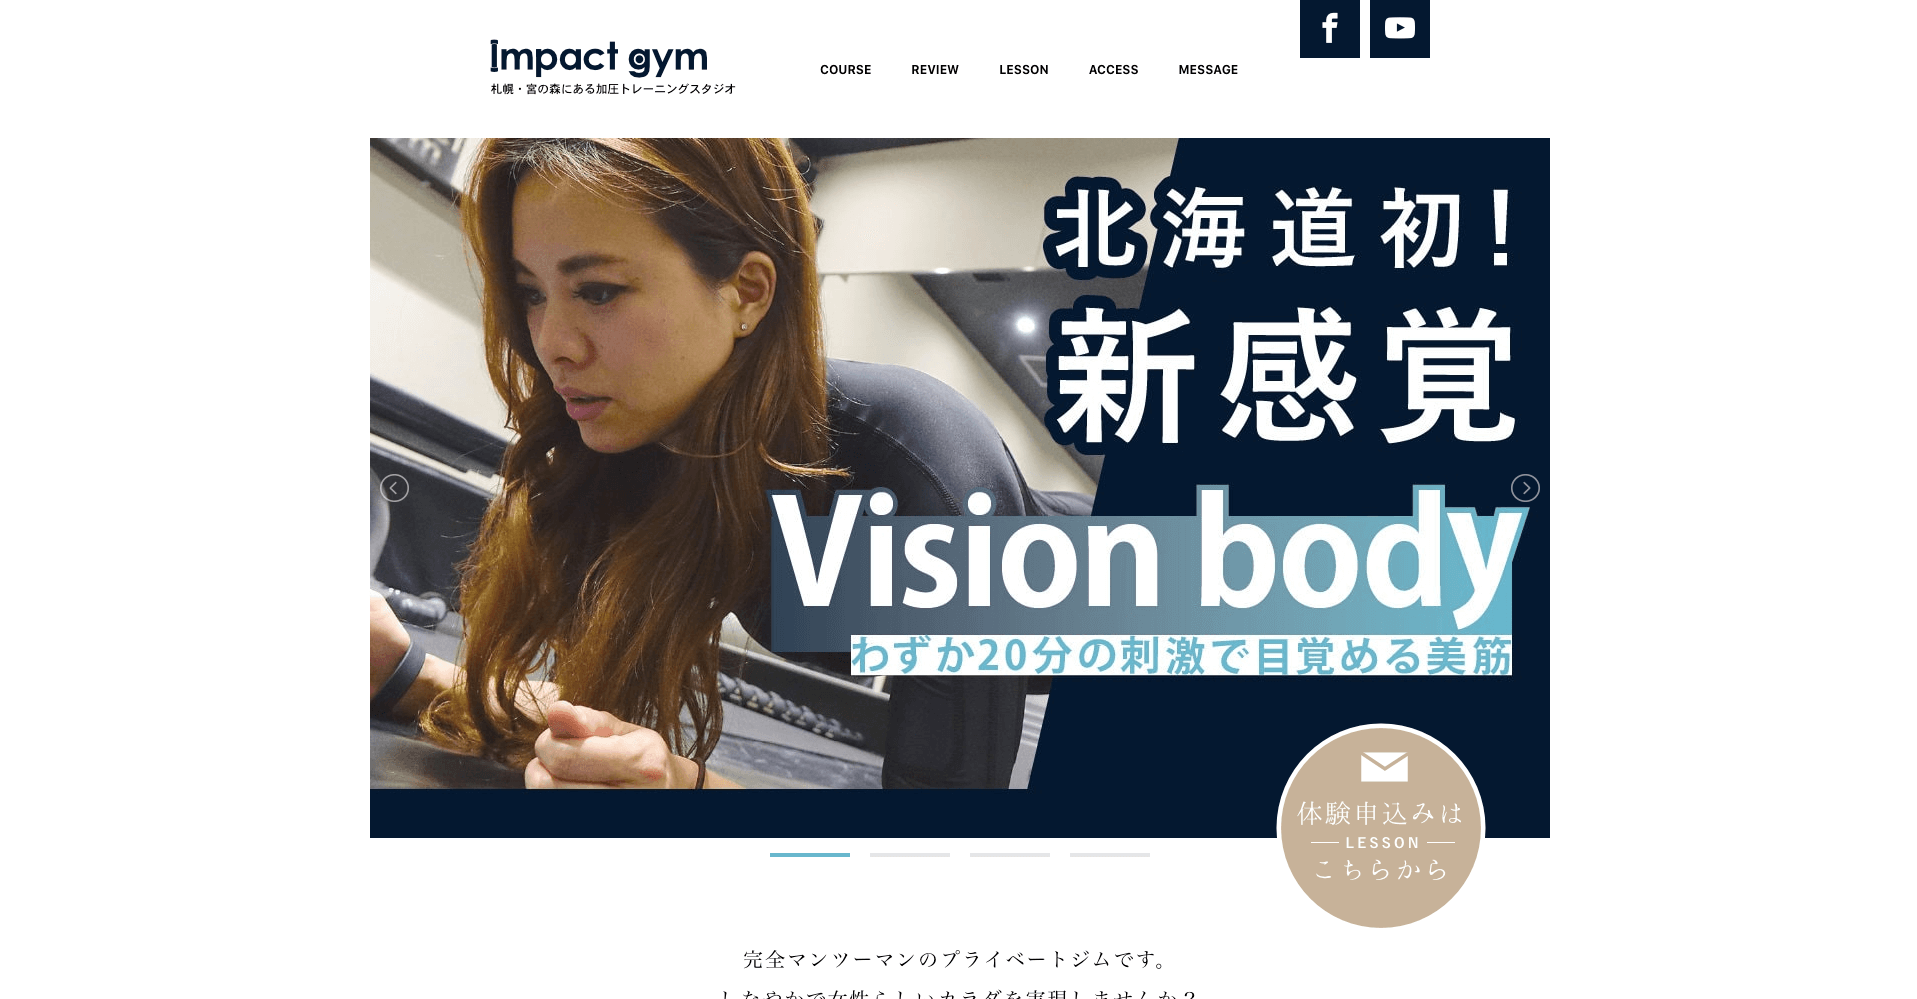 Impact gym札幌加圧ジム